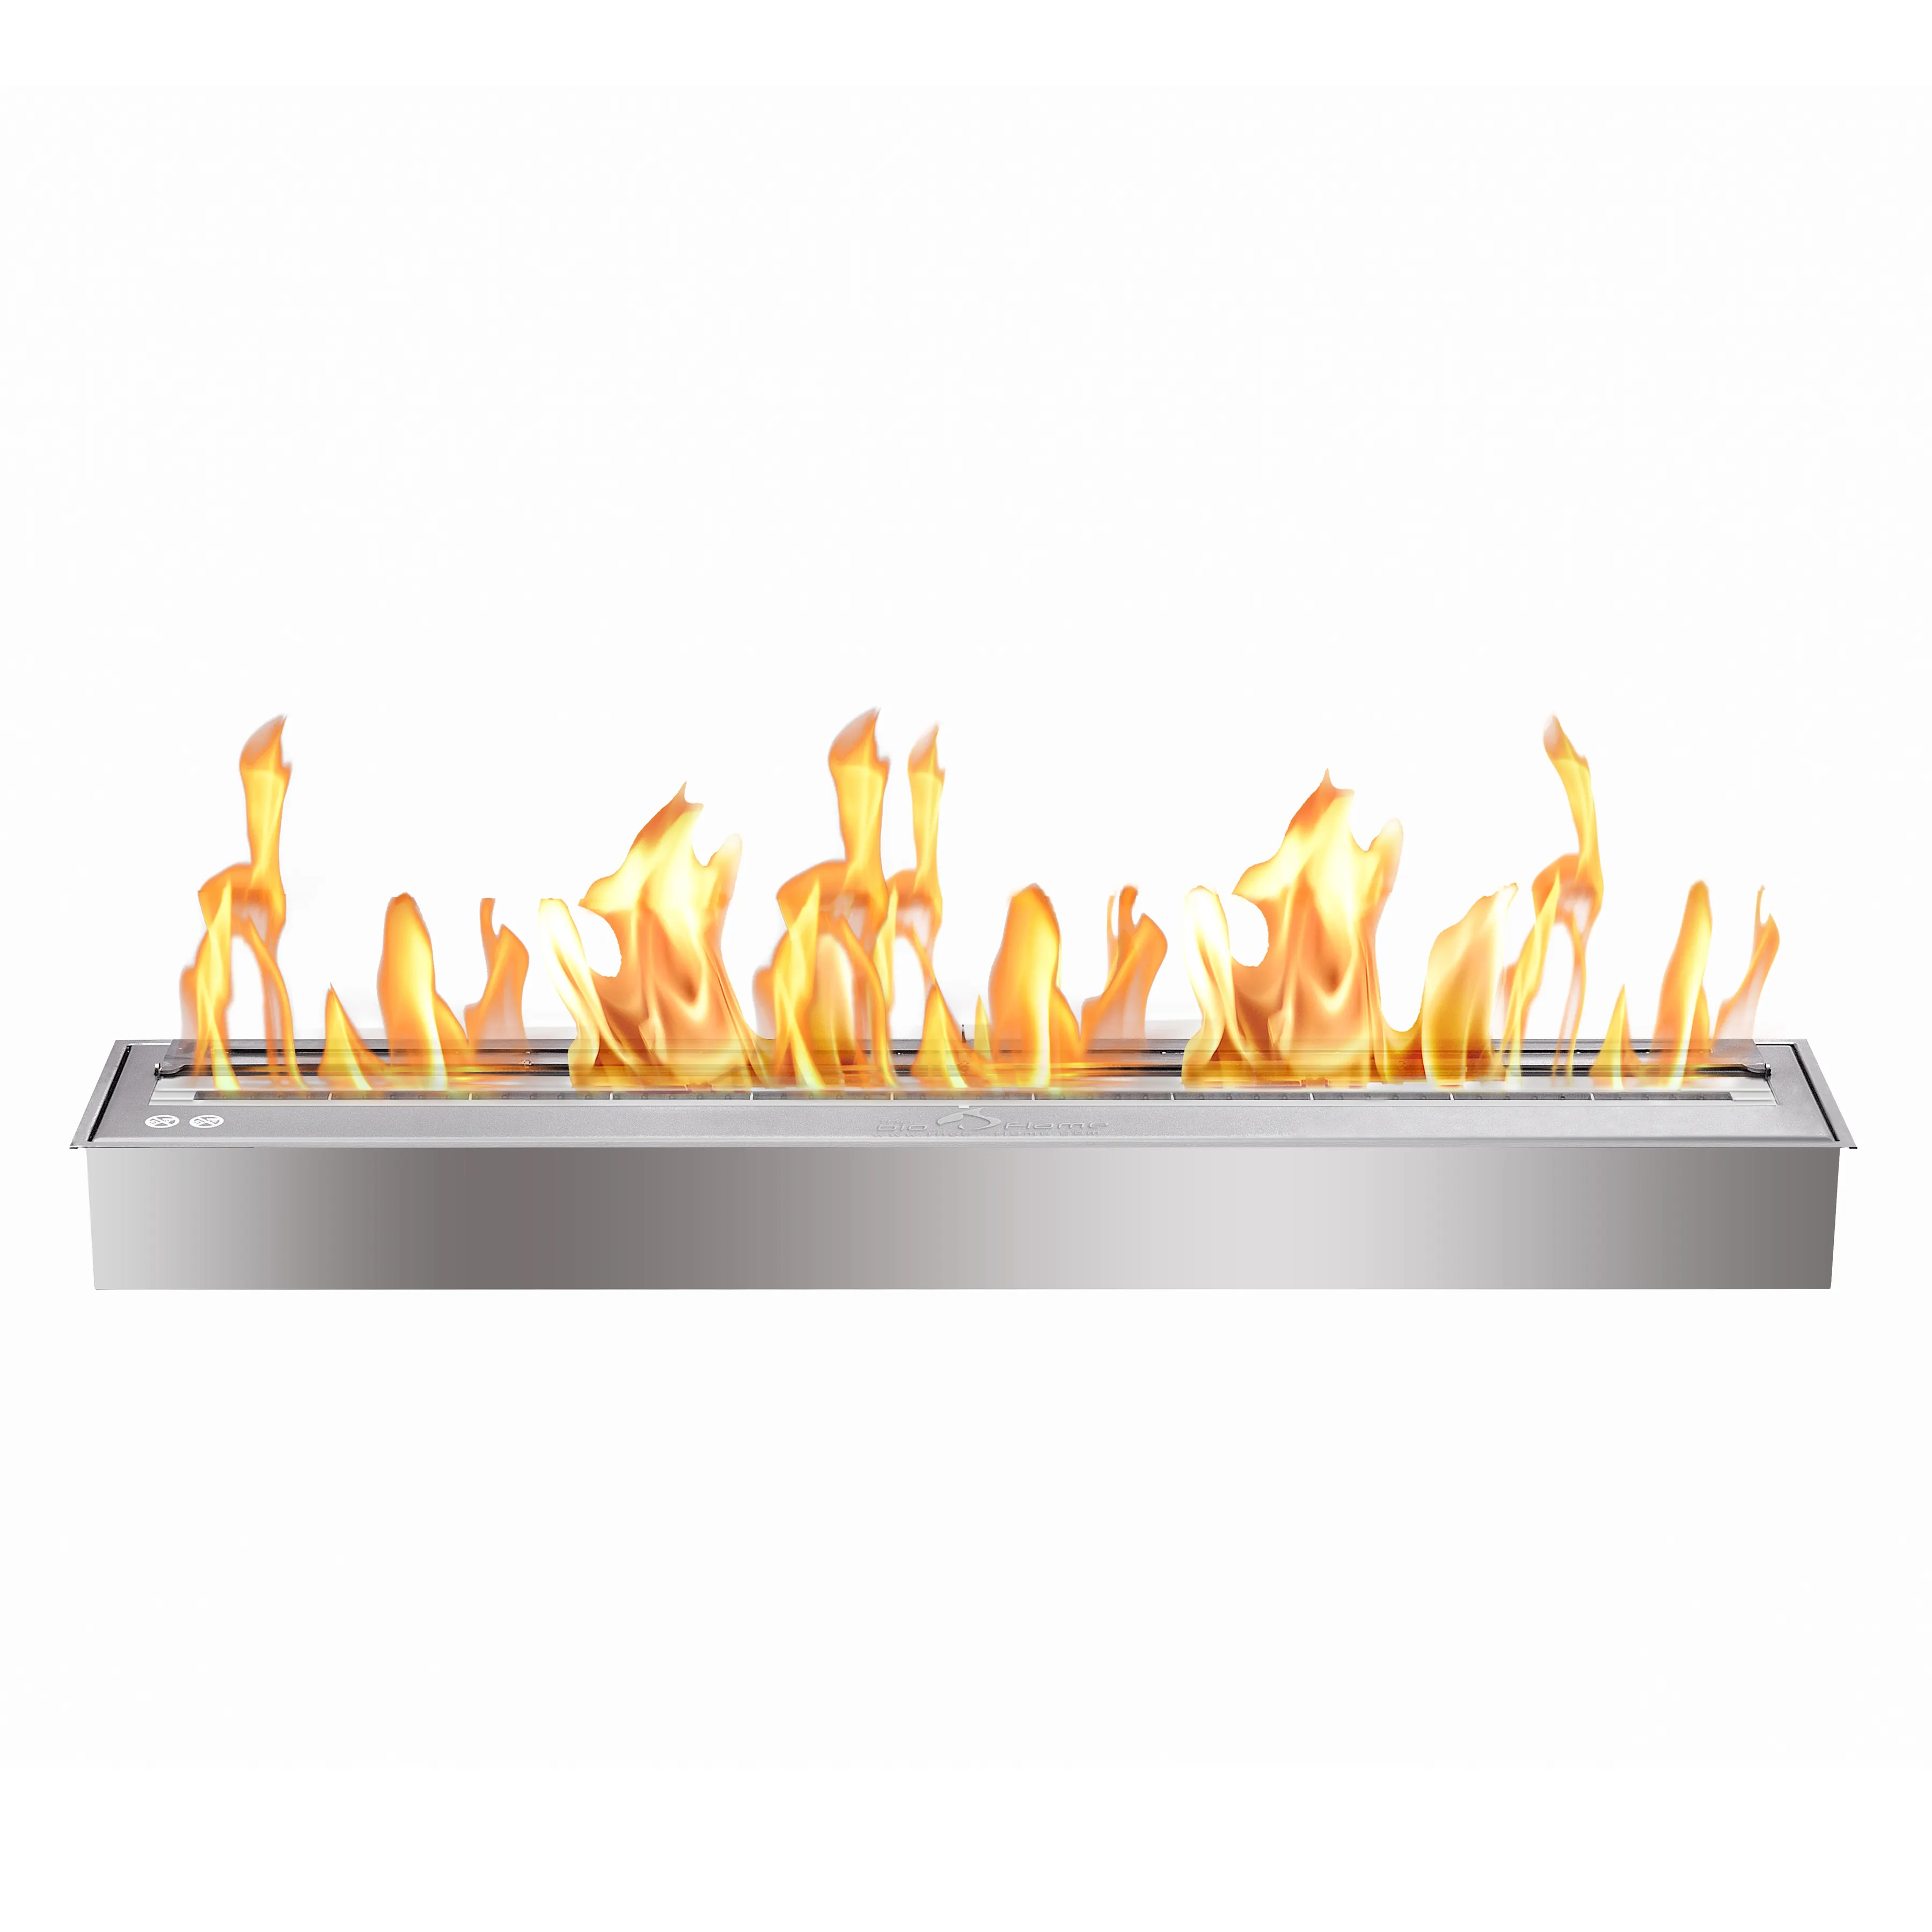 Inno-living 72inch 304stainless steel outdoor ethanol fireplace insert burner